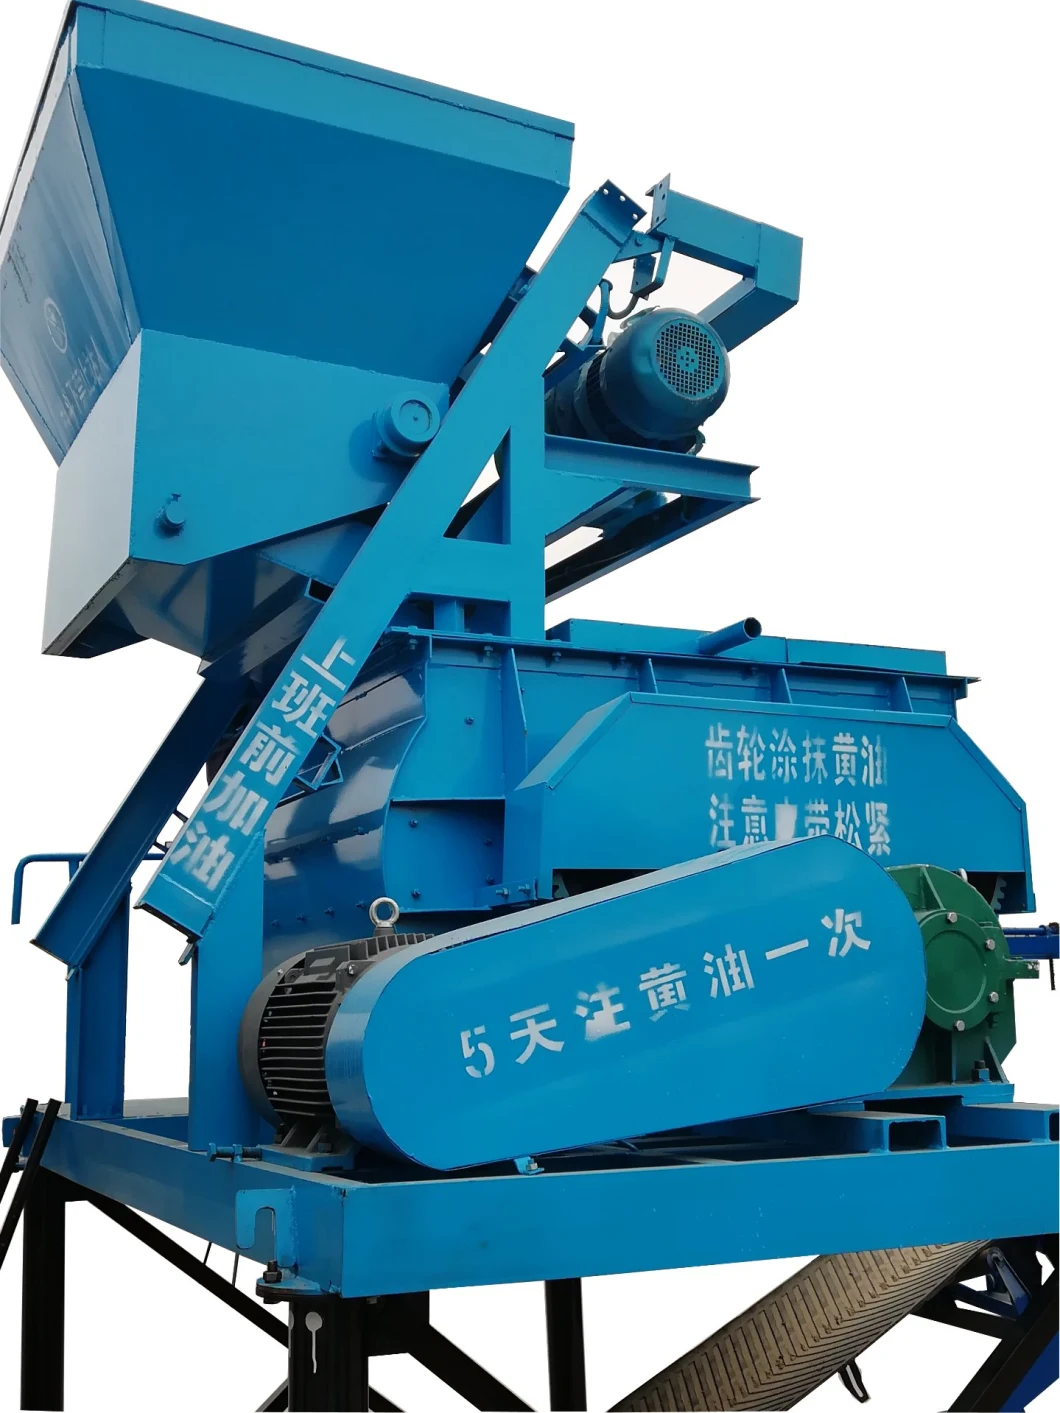 Big Production Capacity - Fully Automatic Hydraulic Brick Machine From China